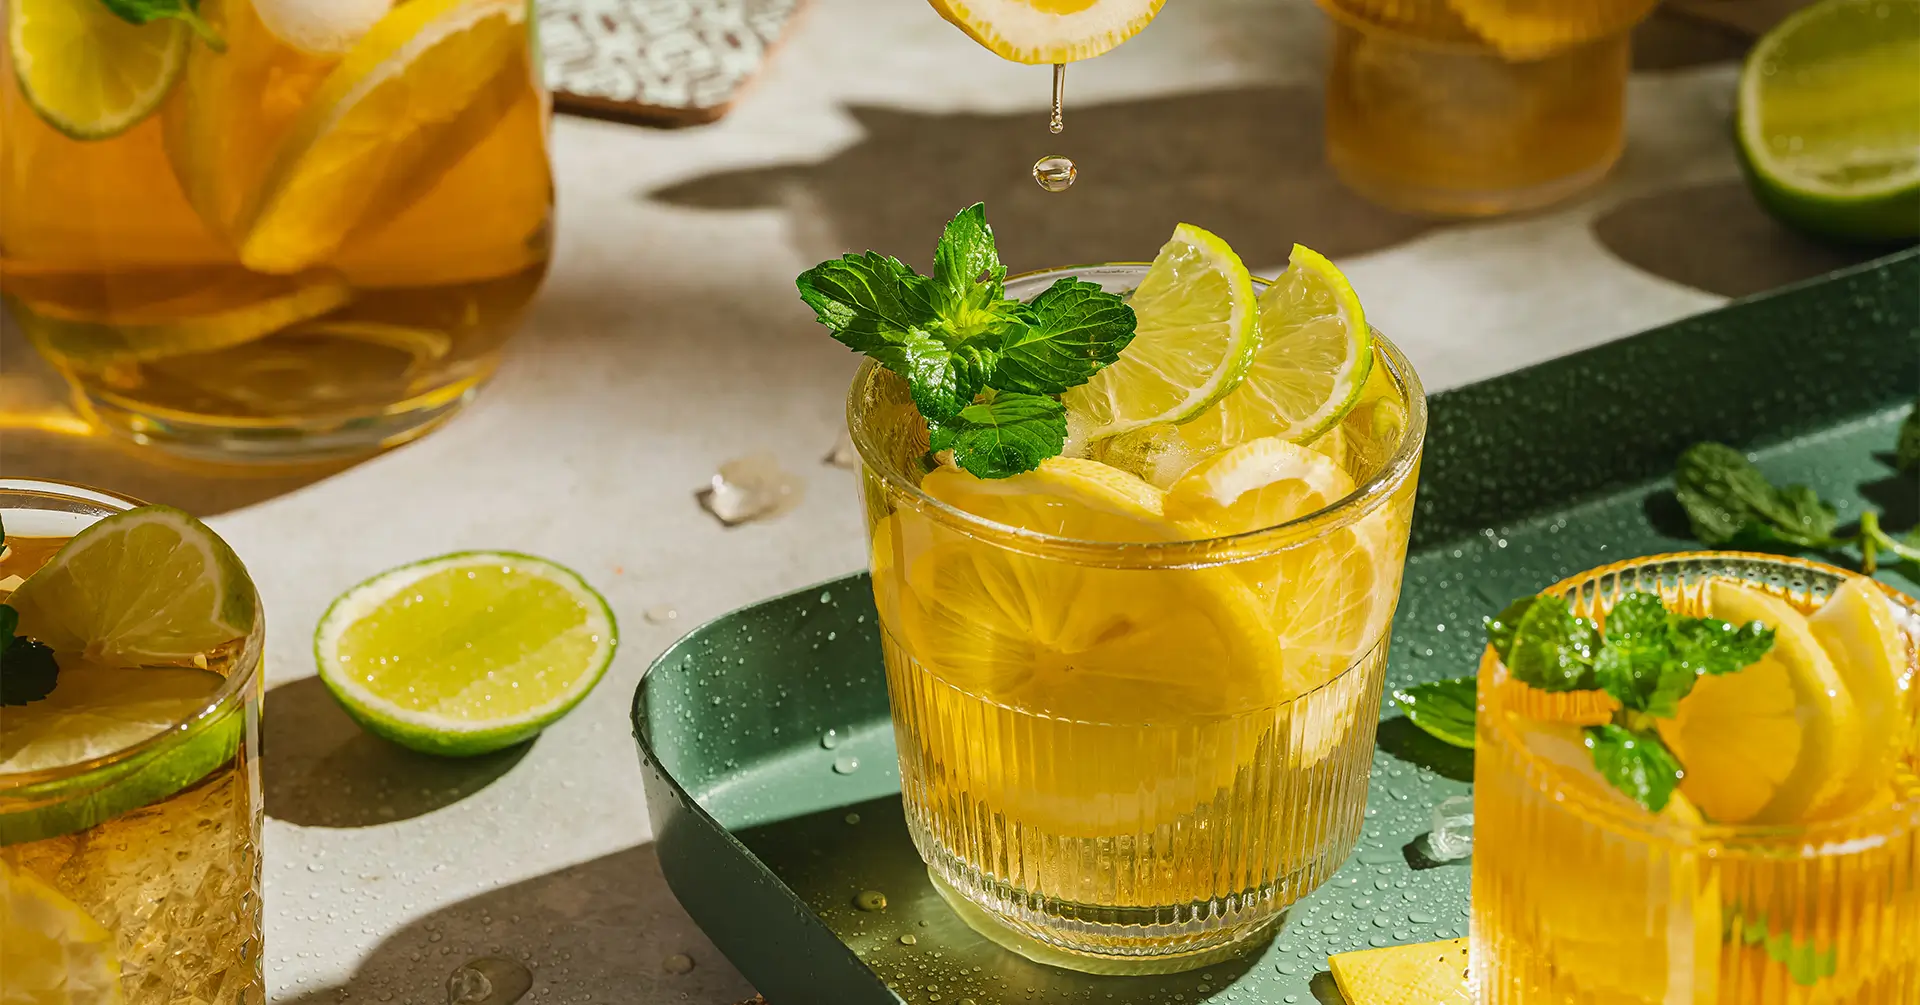 www.rajkotupdates.news: Drinking Lemon is as Beneficial